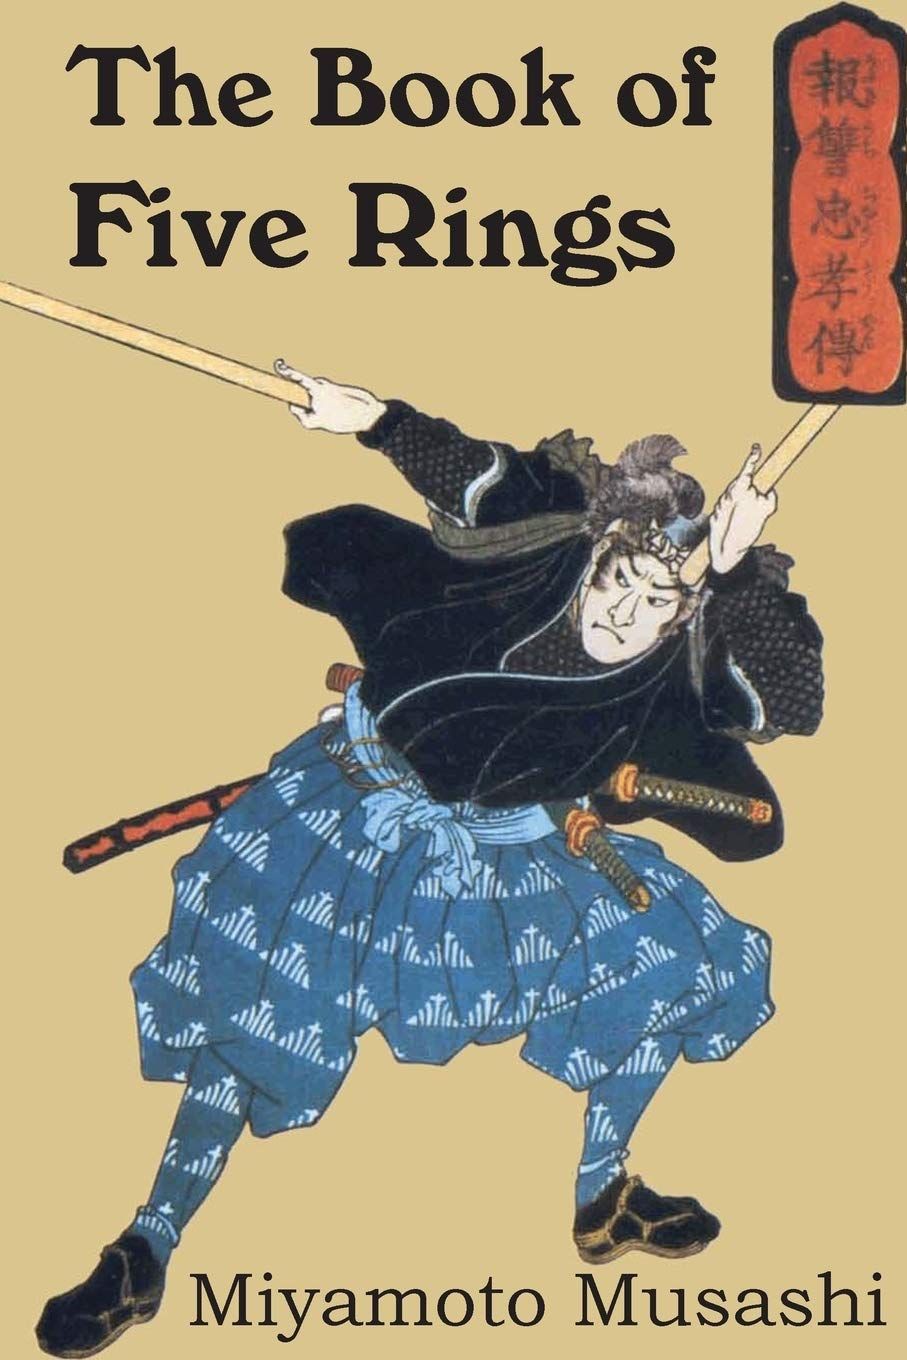 Book 'The Book of Five Rings' Miyamoto Musashi